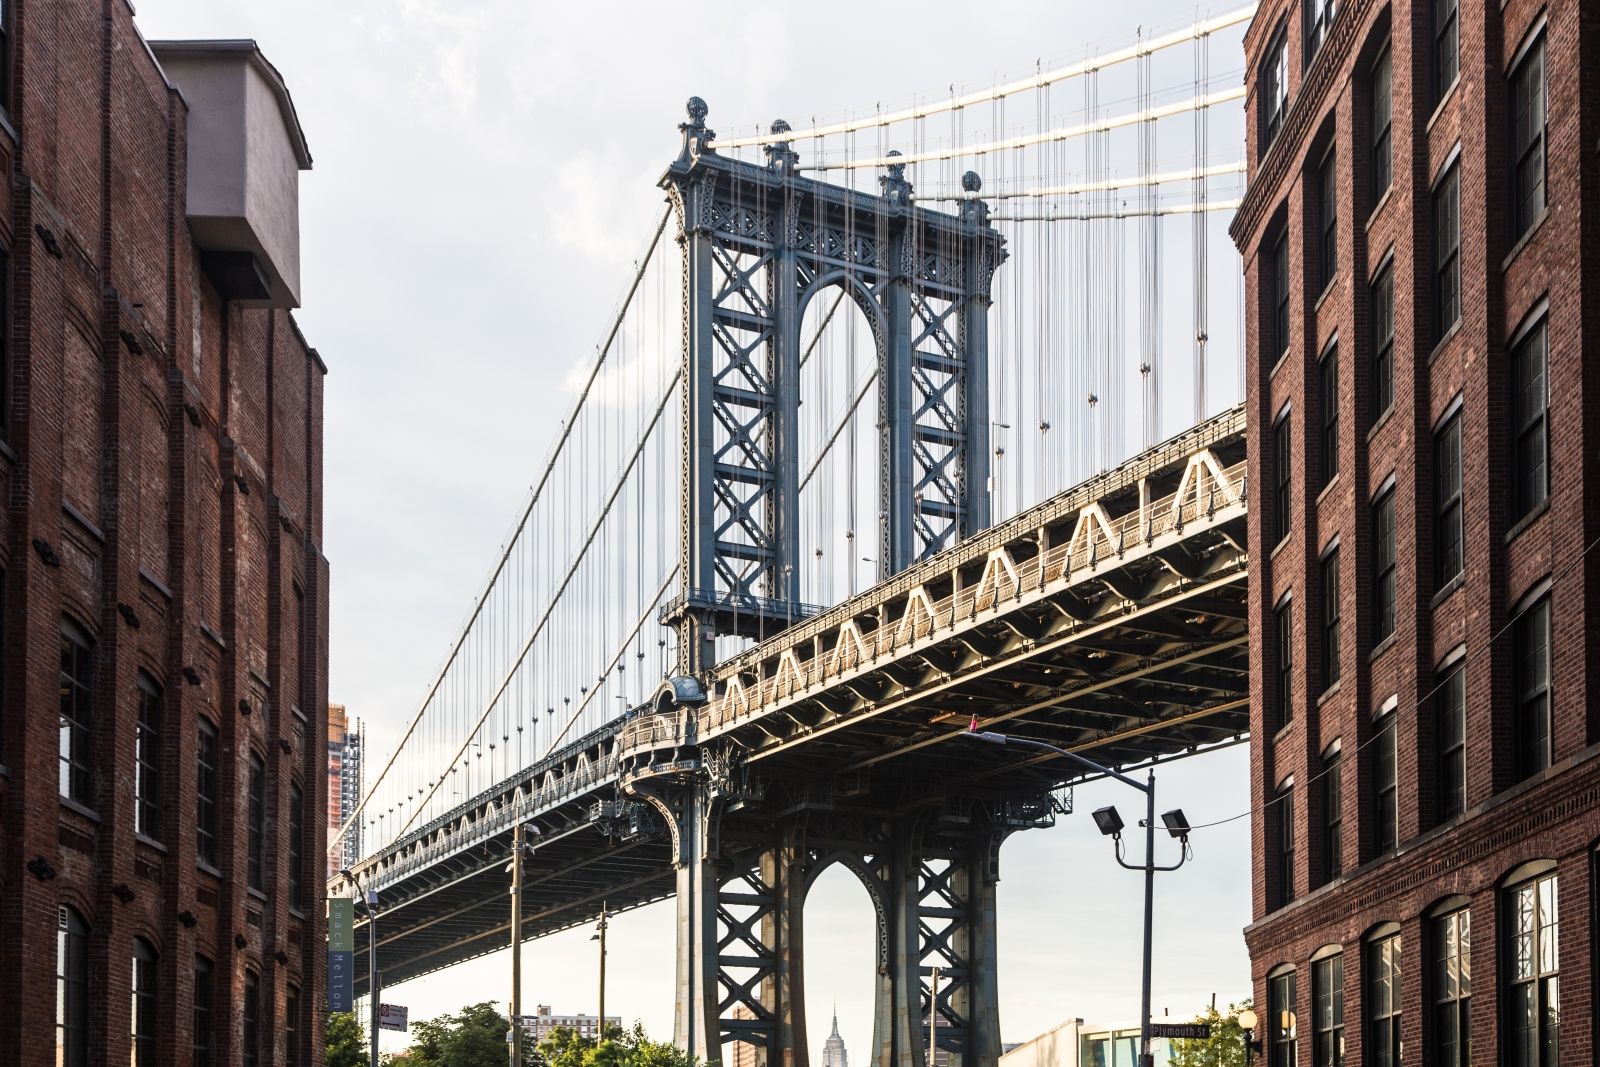 NYC Bridges: The 11 New York Area Bridges You Need To Know